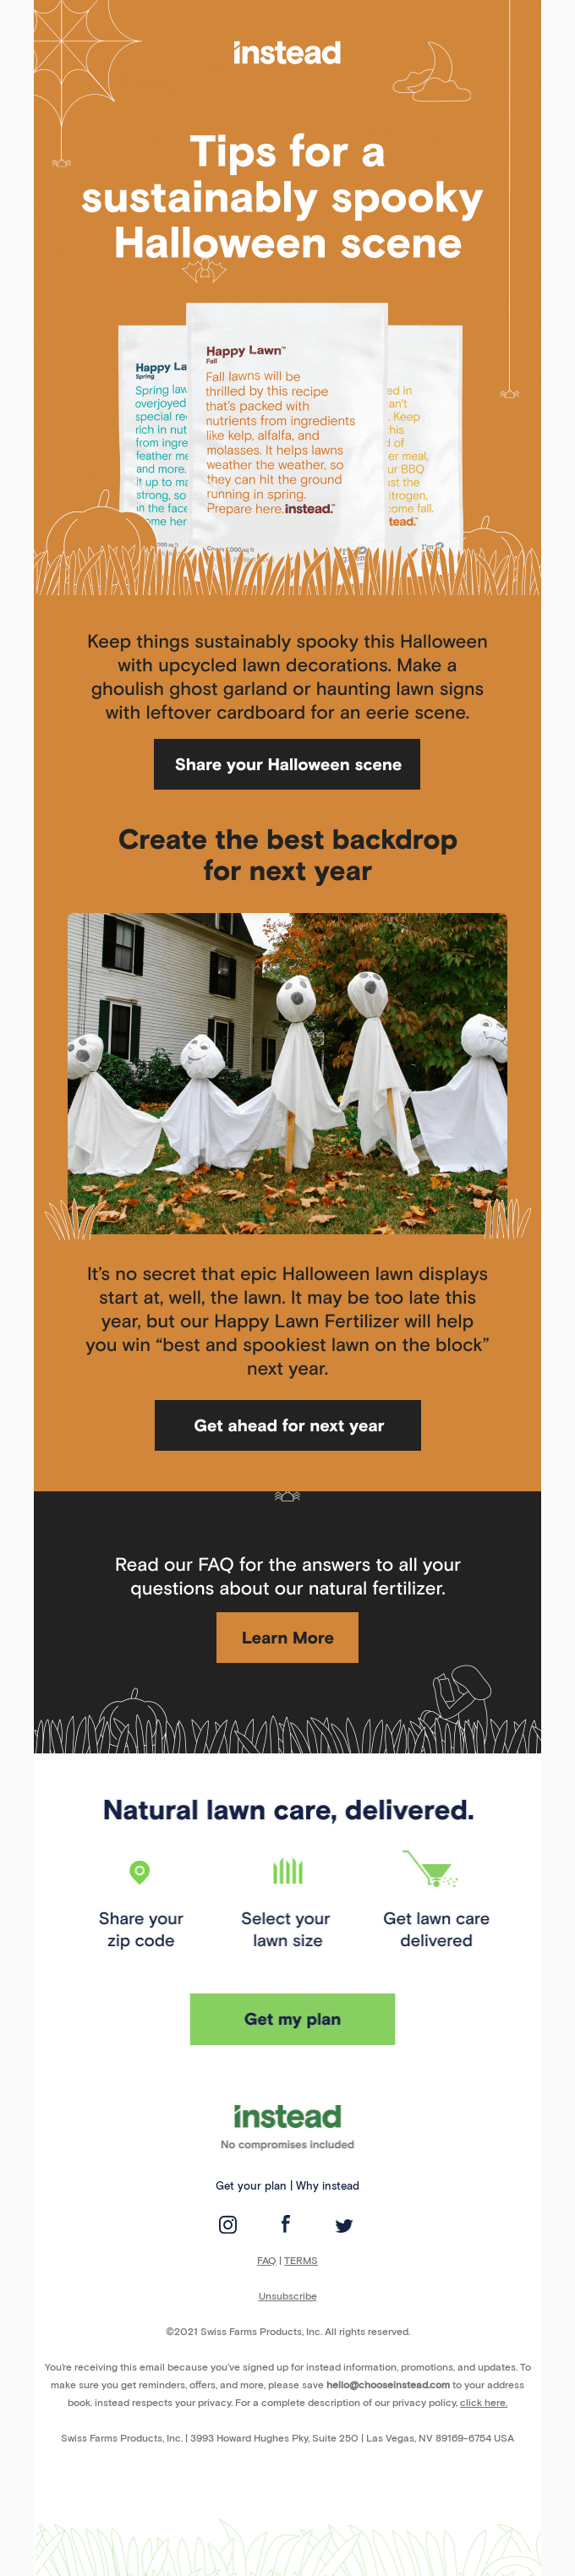 Make Halloween sustainably spooky 👻